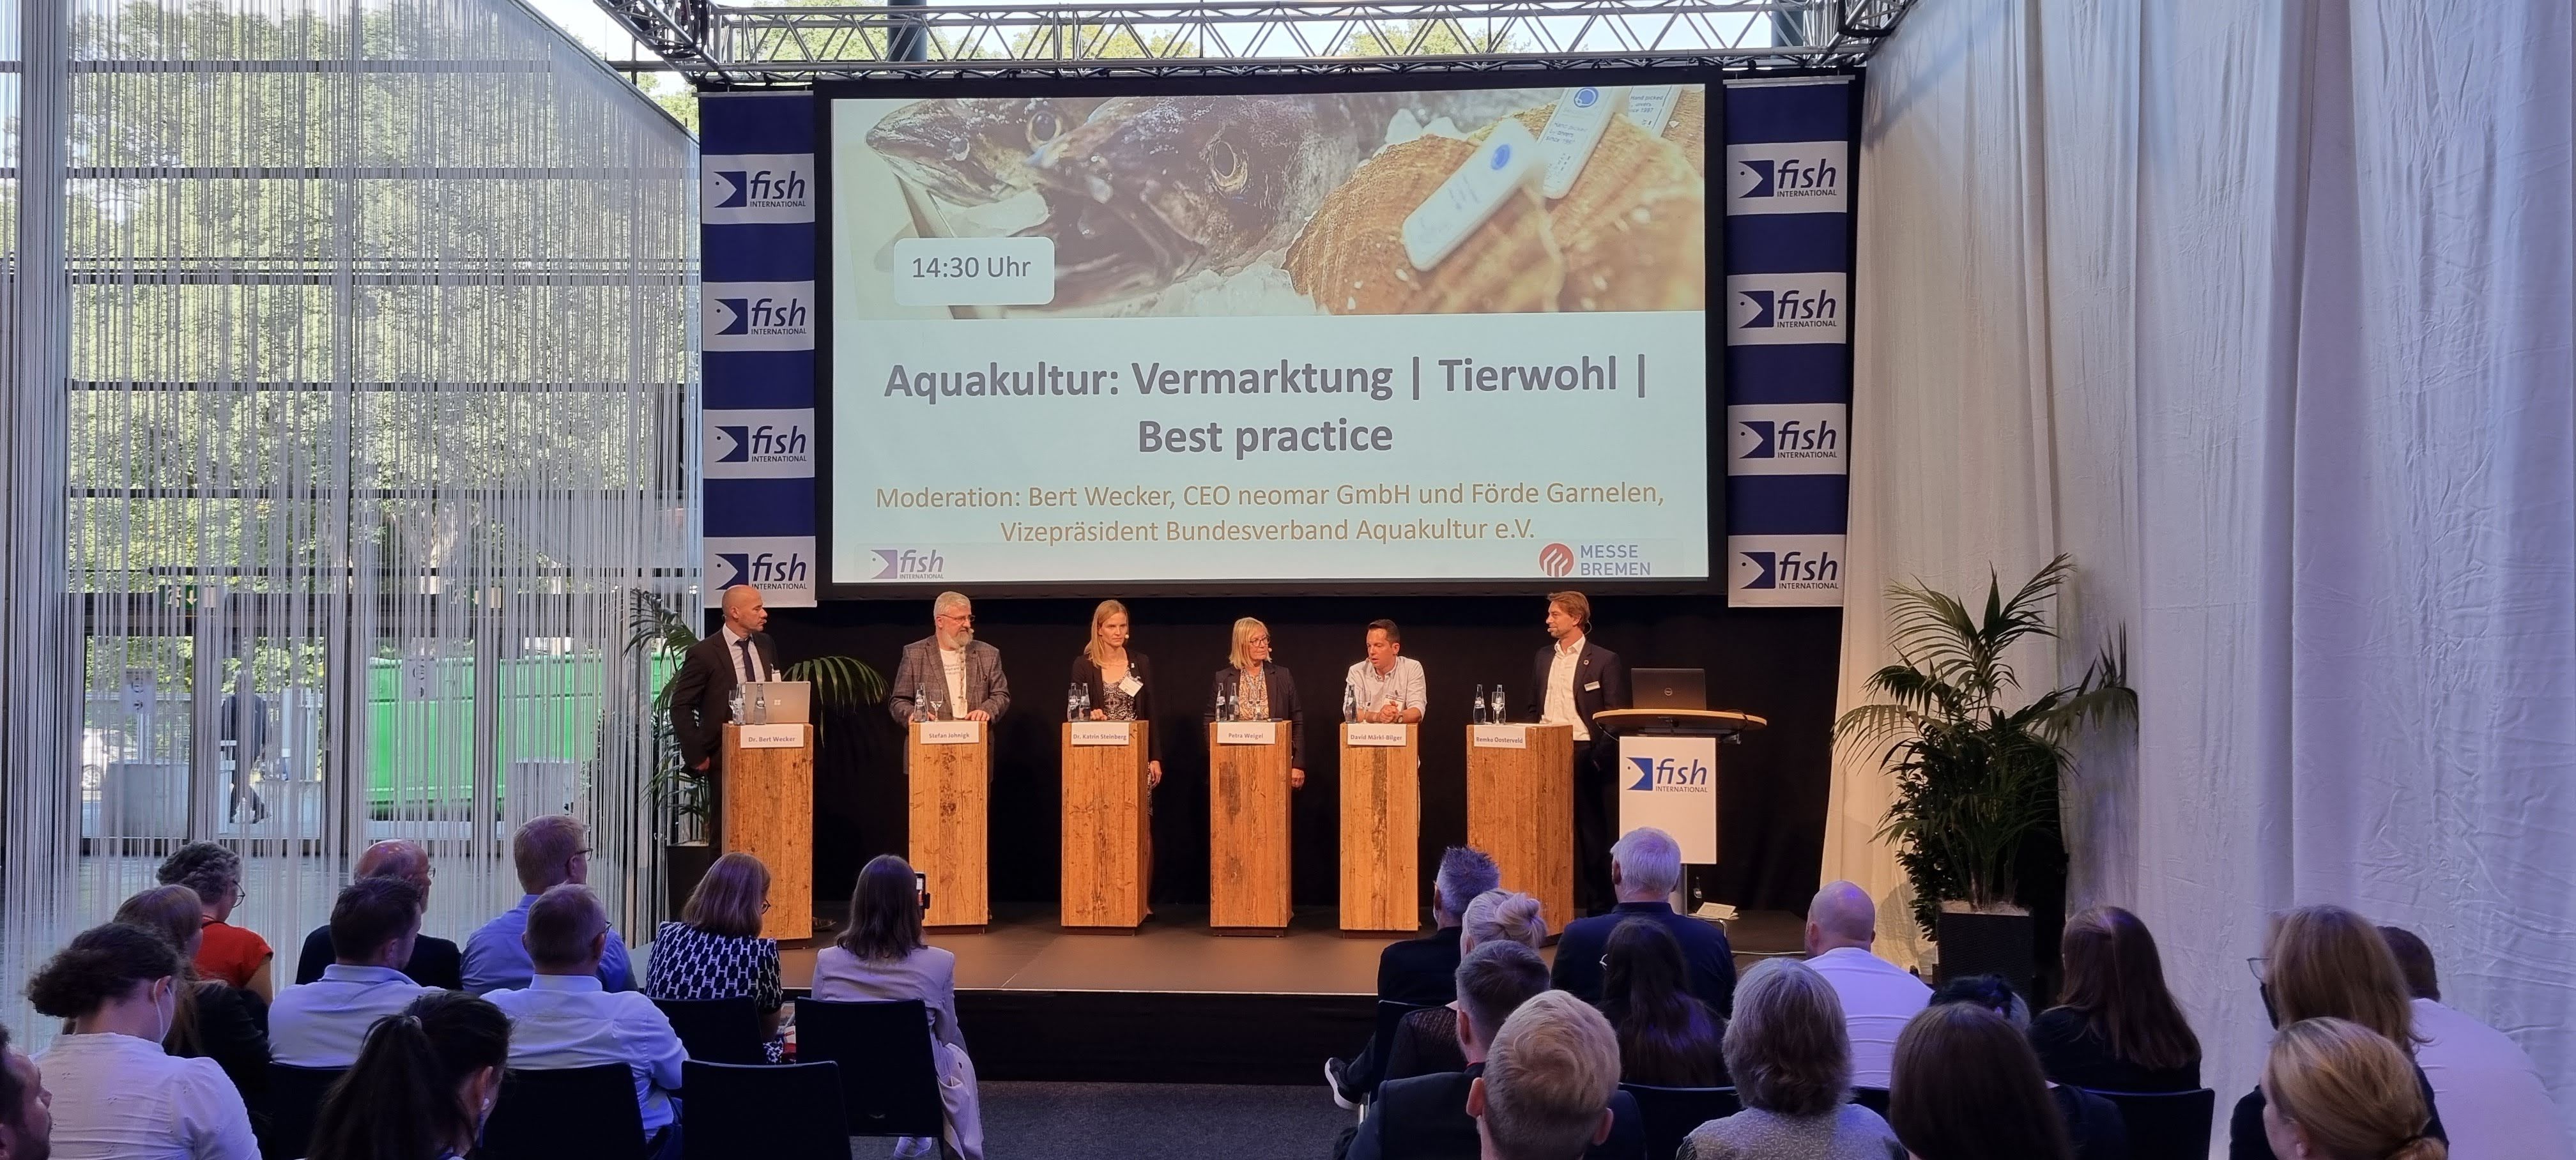 Bert Wecker, Session fish international, Aquakultur